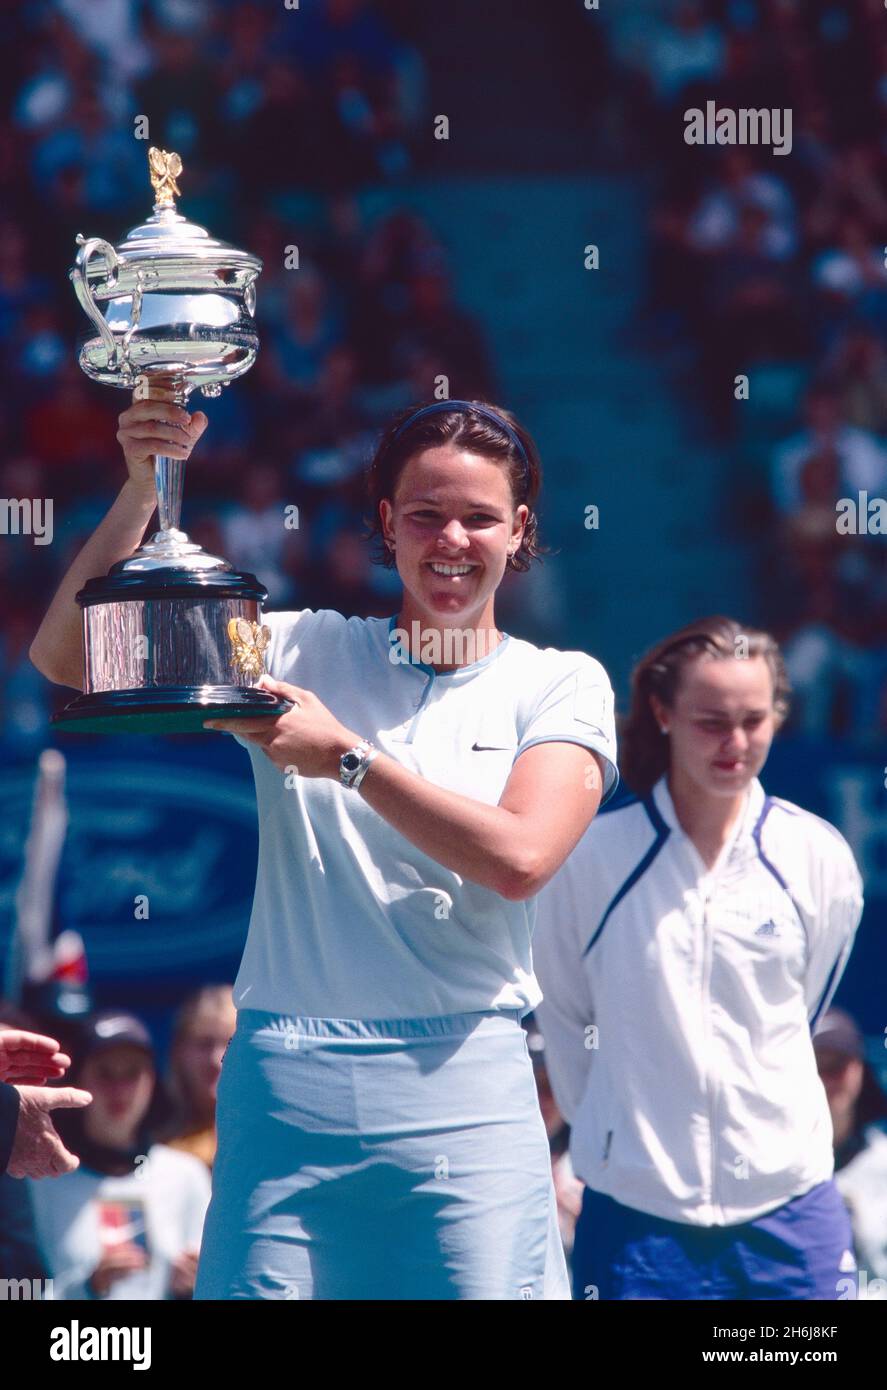 American tennis player Lindsay Davenport, Australian Open 1999 Stock Photo